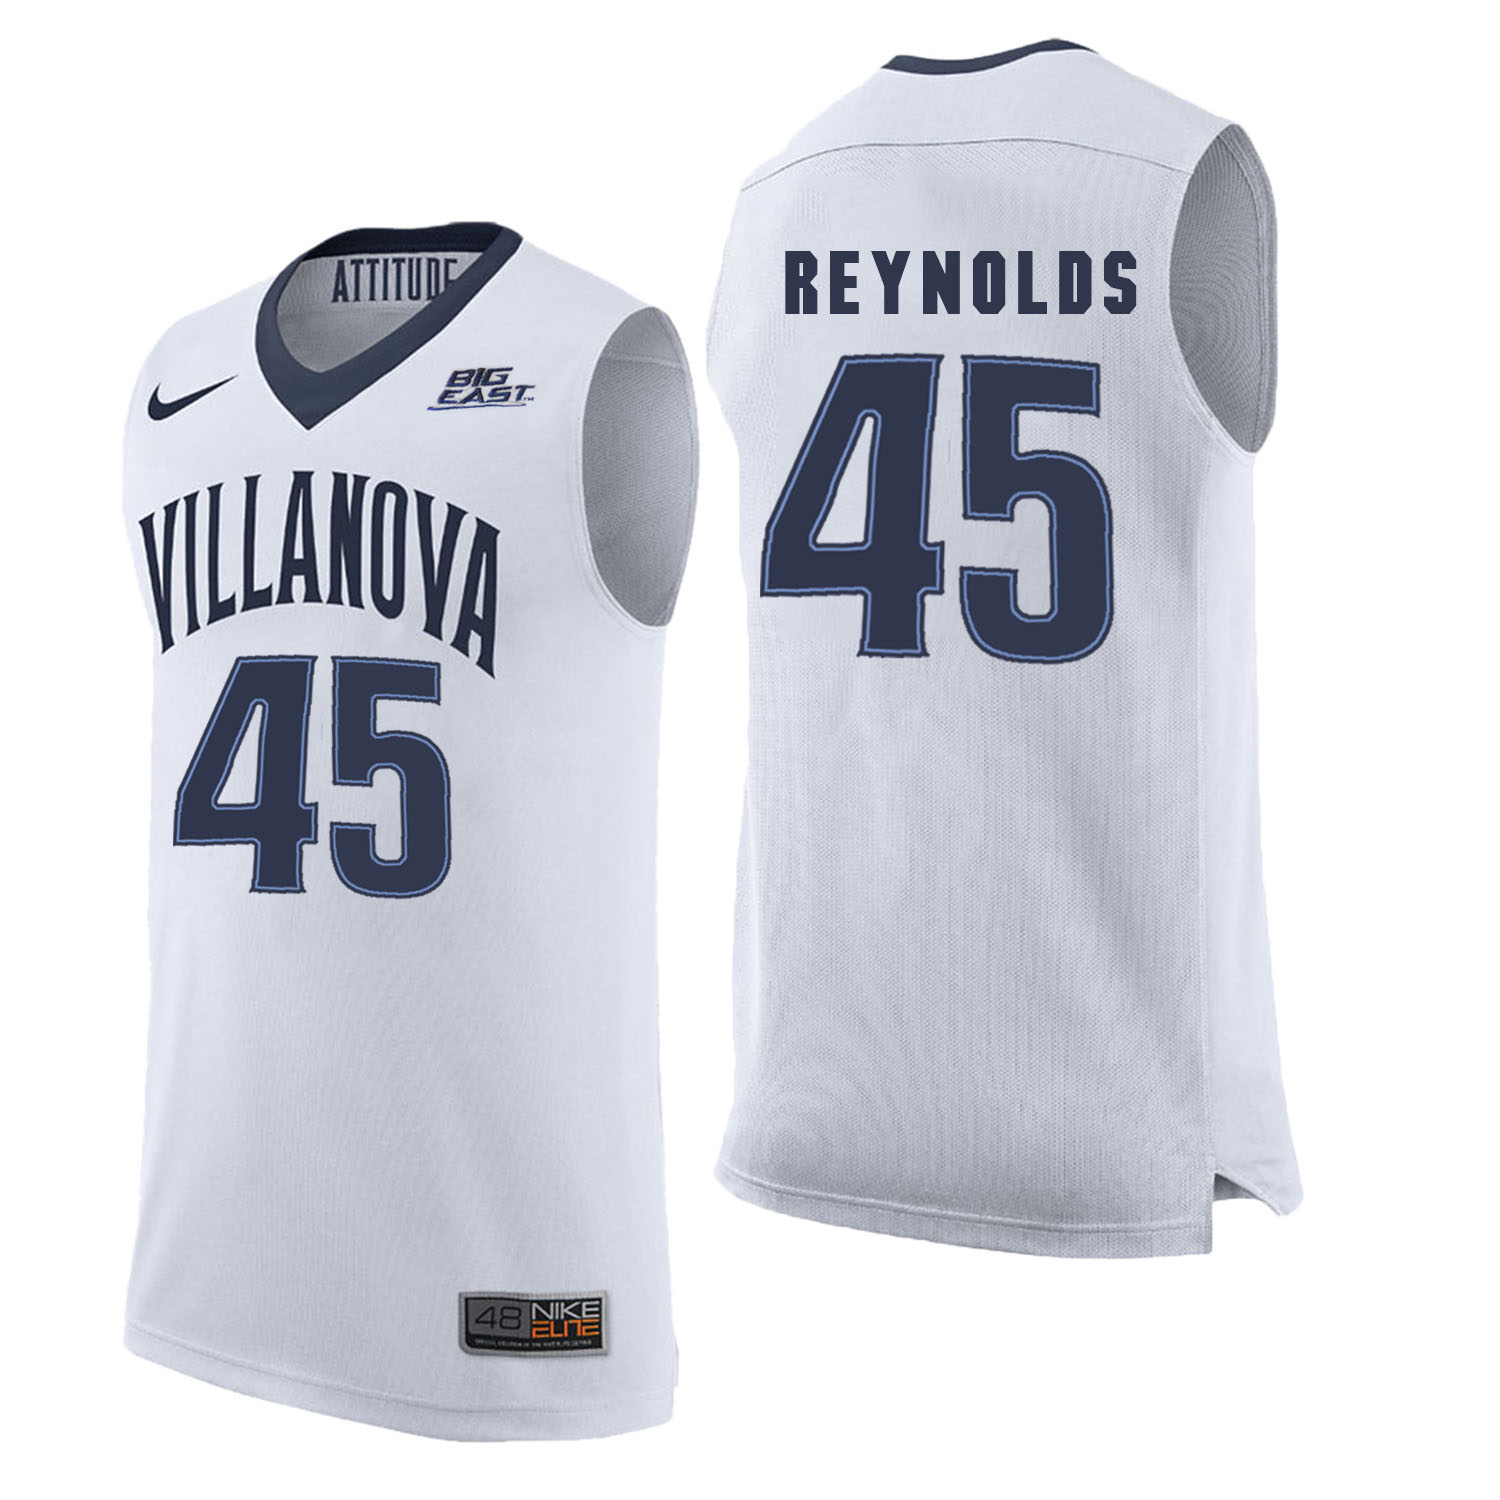 Villanova Wildcats 45 Darryl Reynolds White College Basketball Elite Jersey